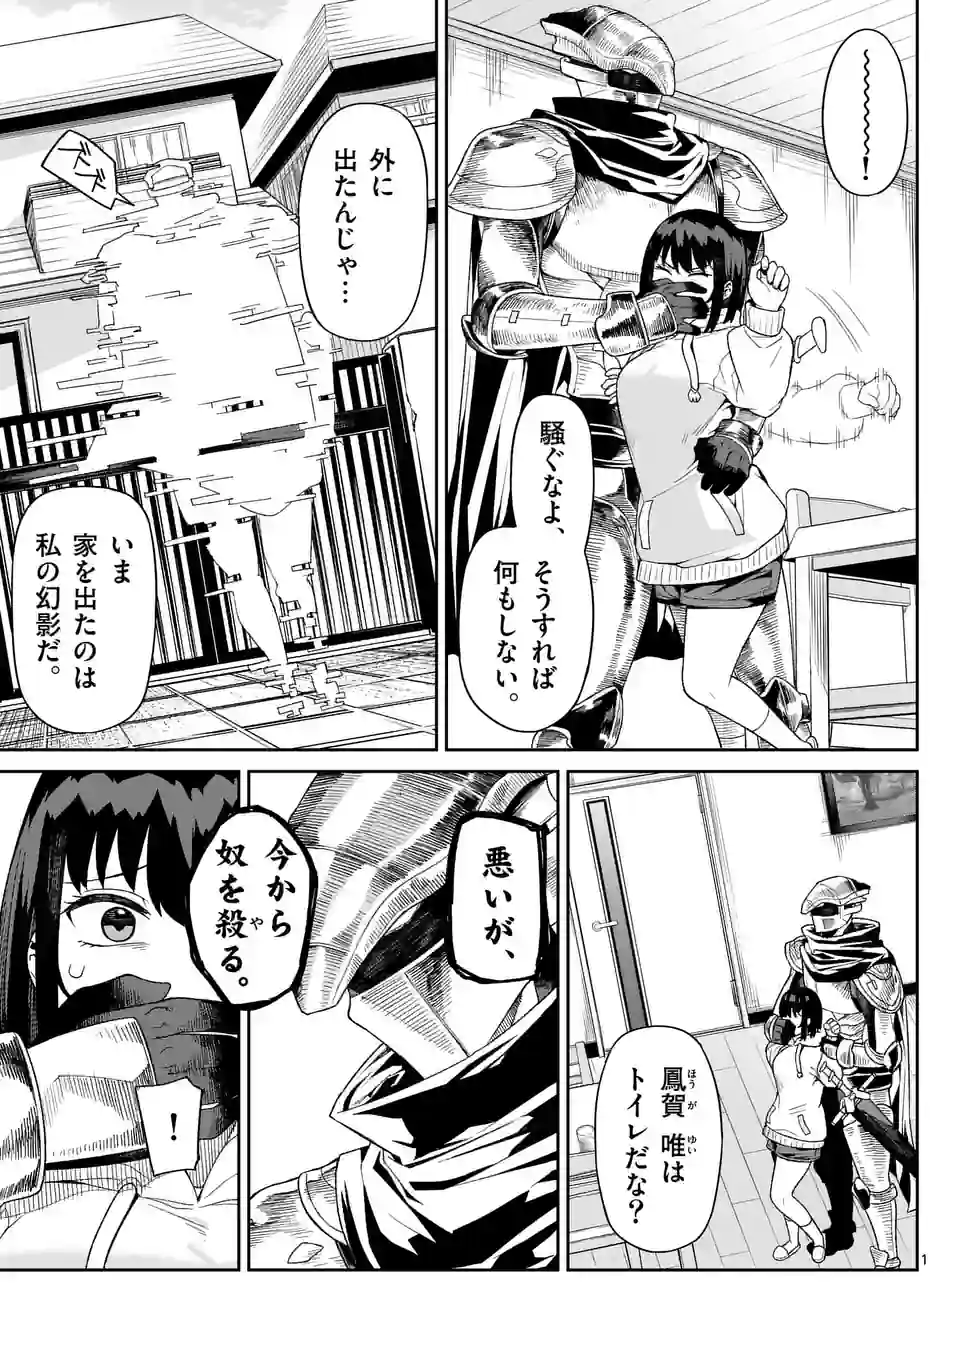 Bakemono Goroshi no Psycholily - Chapter 5 - Page 1